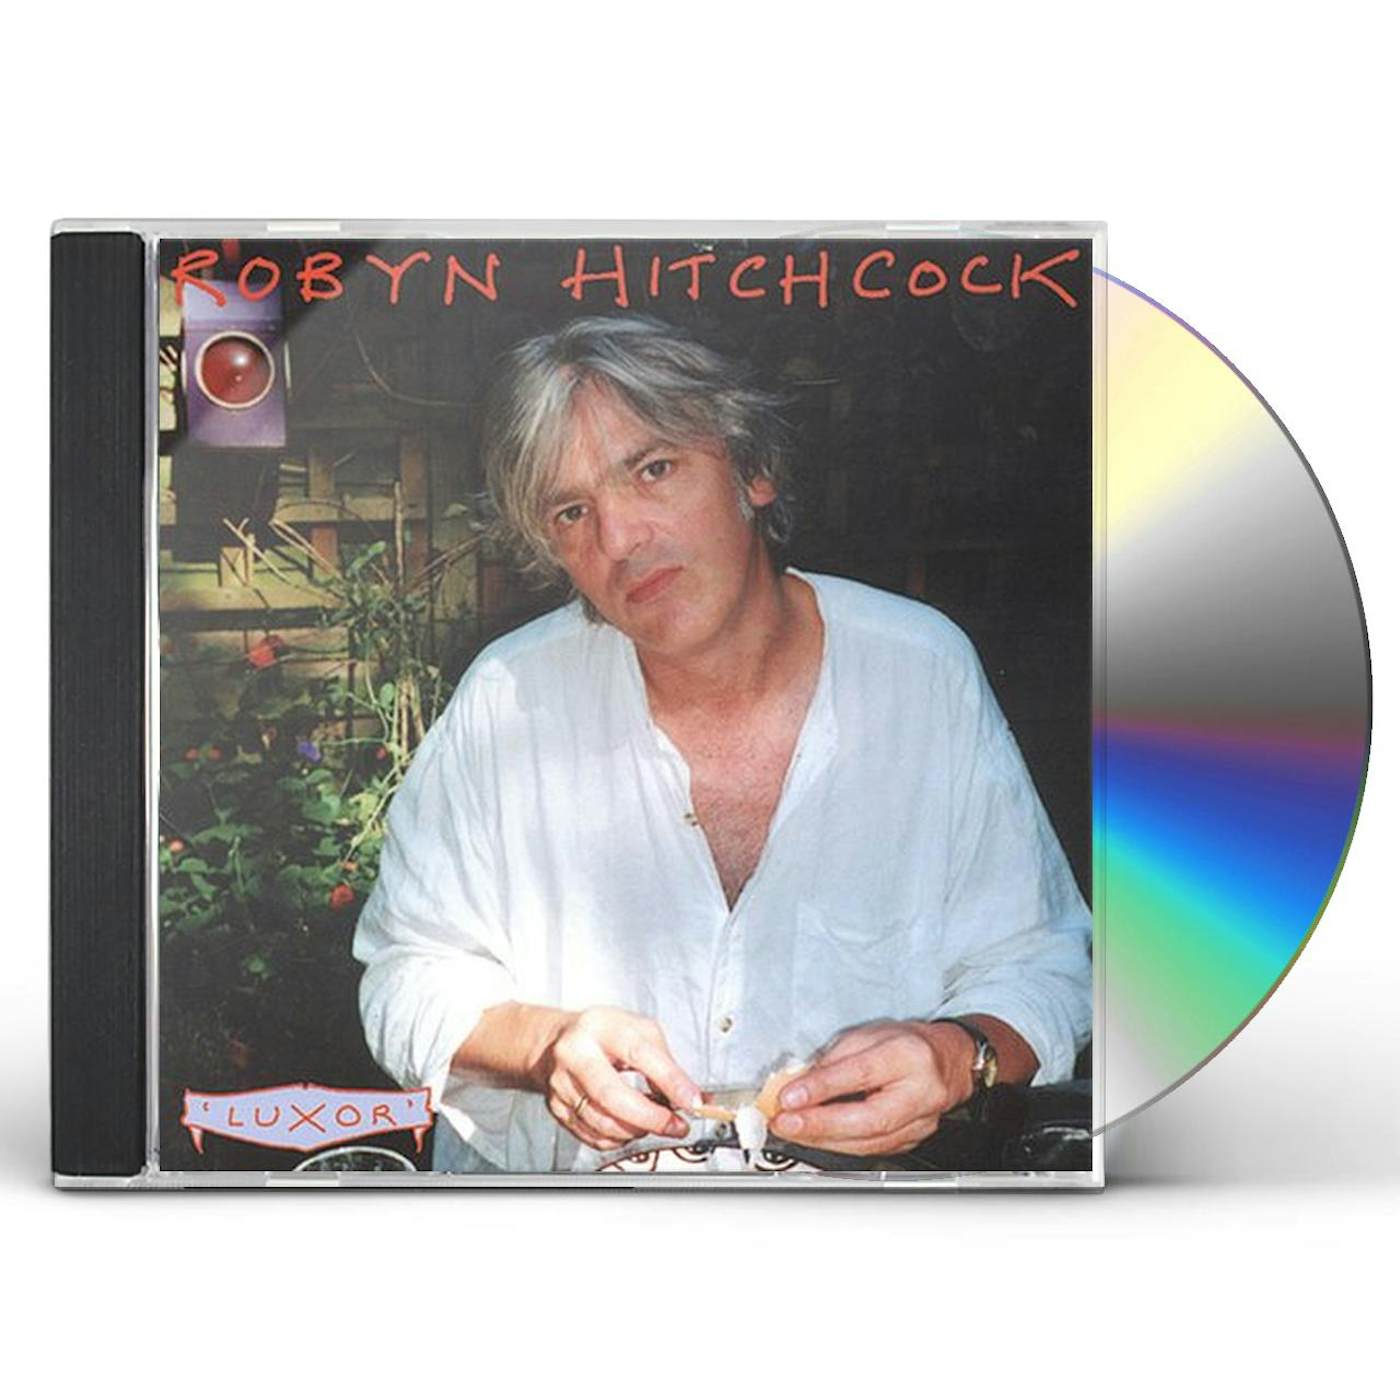 Robyn Hitchcock LUXOR CD